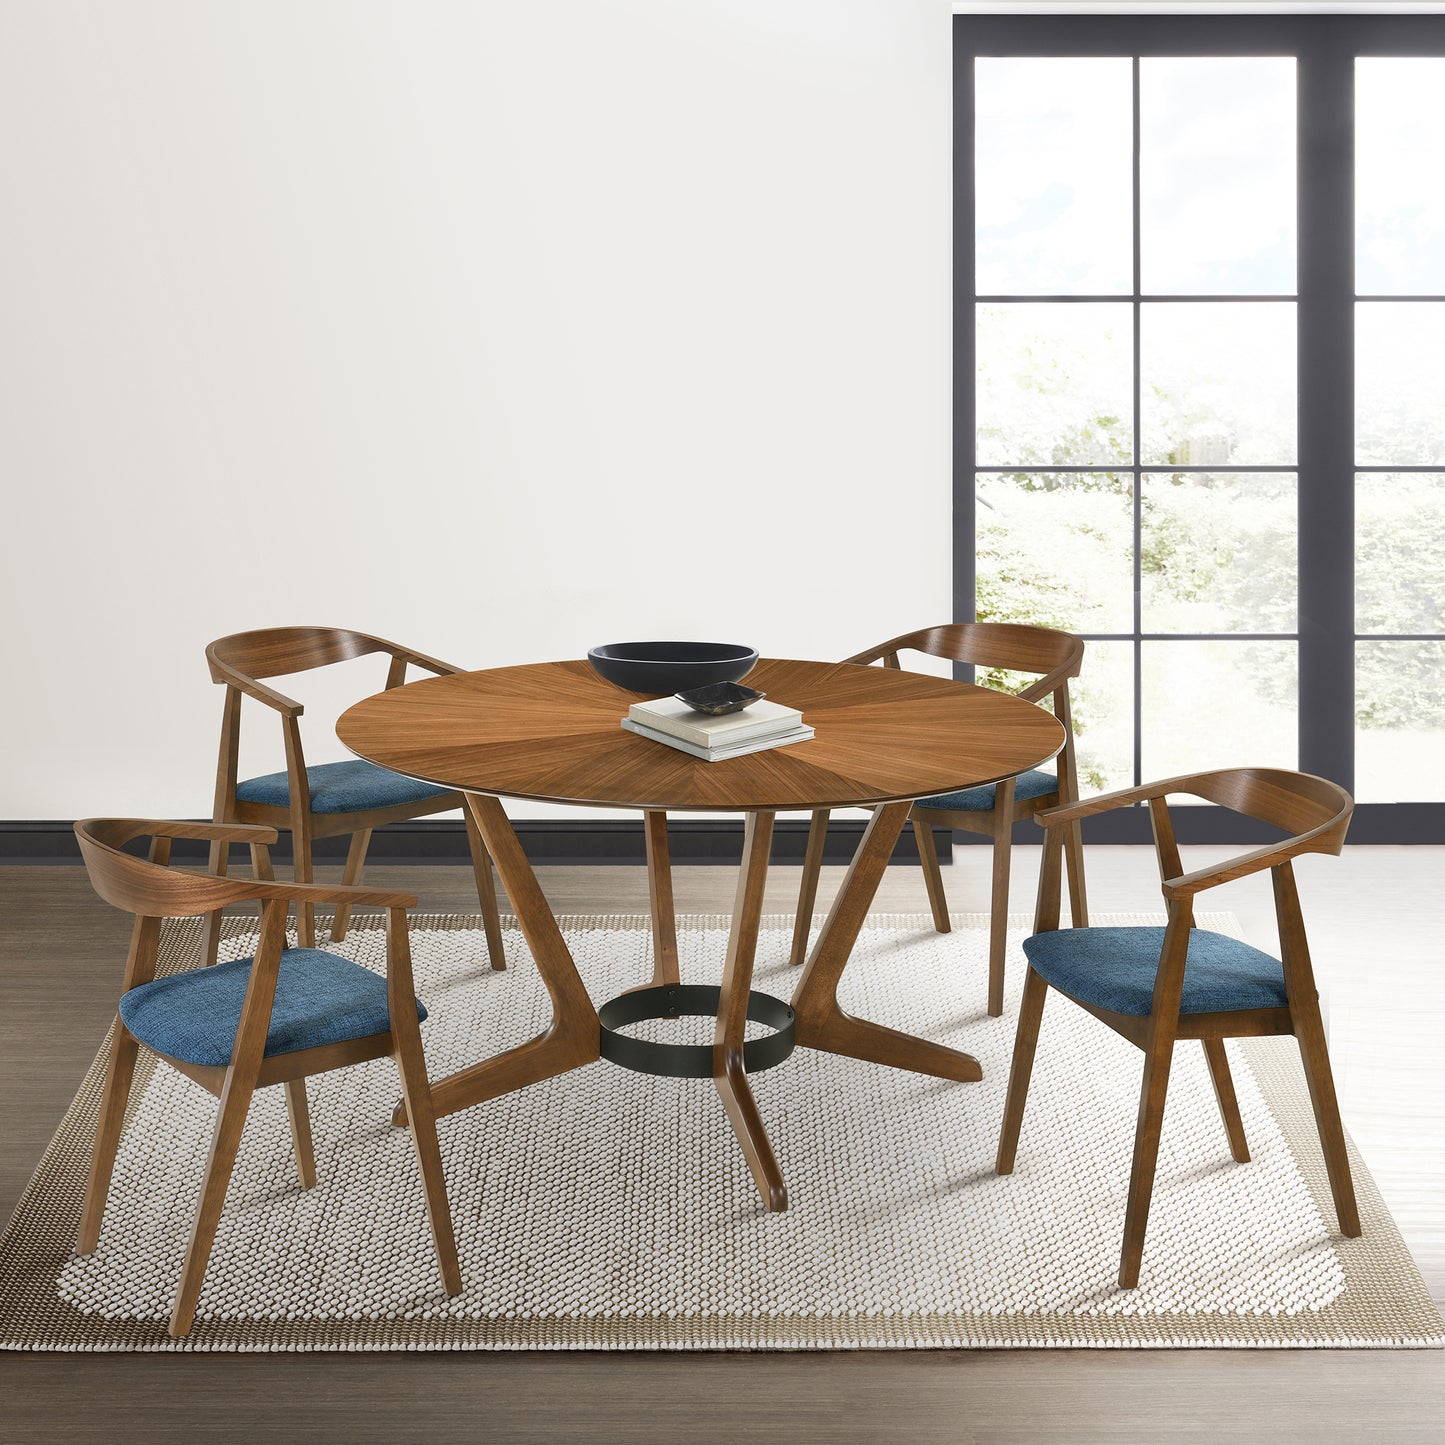 Santana 5 Piece Round Walnut Wood Dining Table Set with Blue Fabric